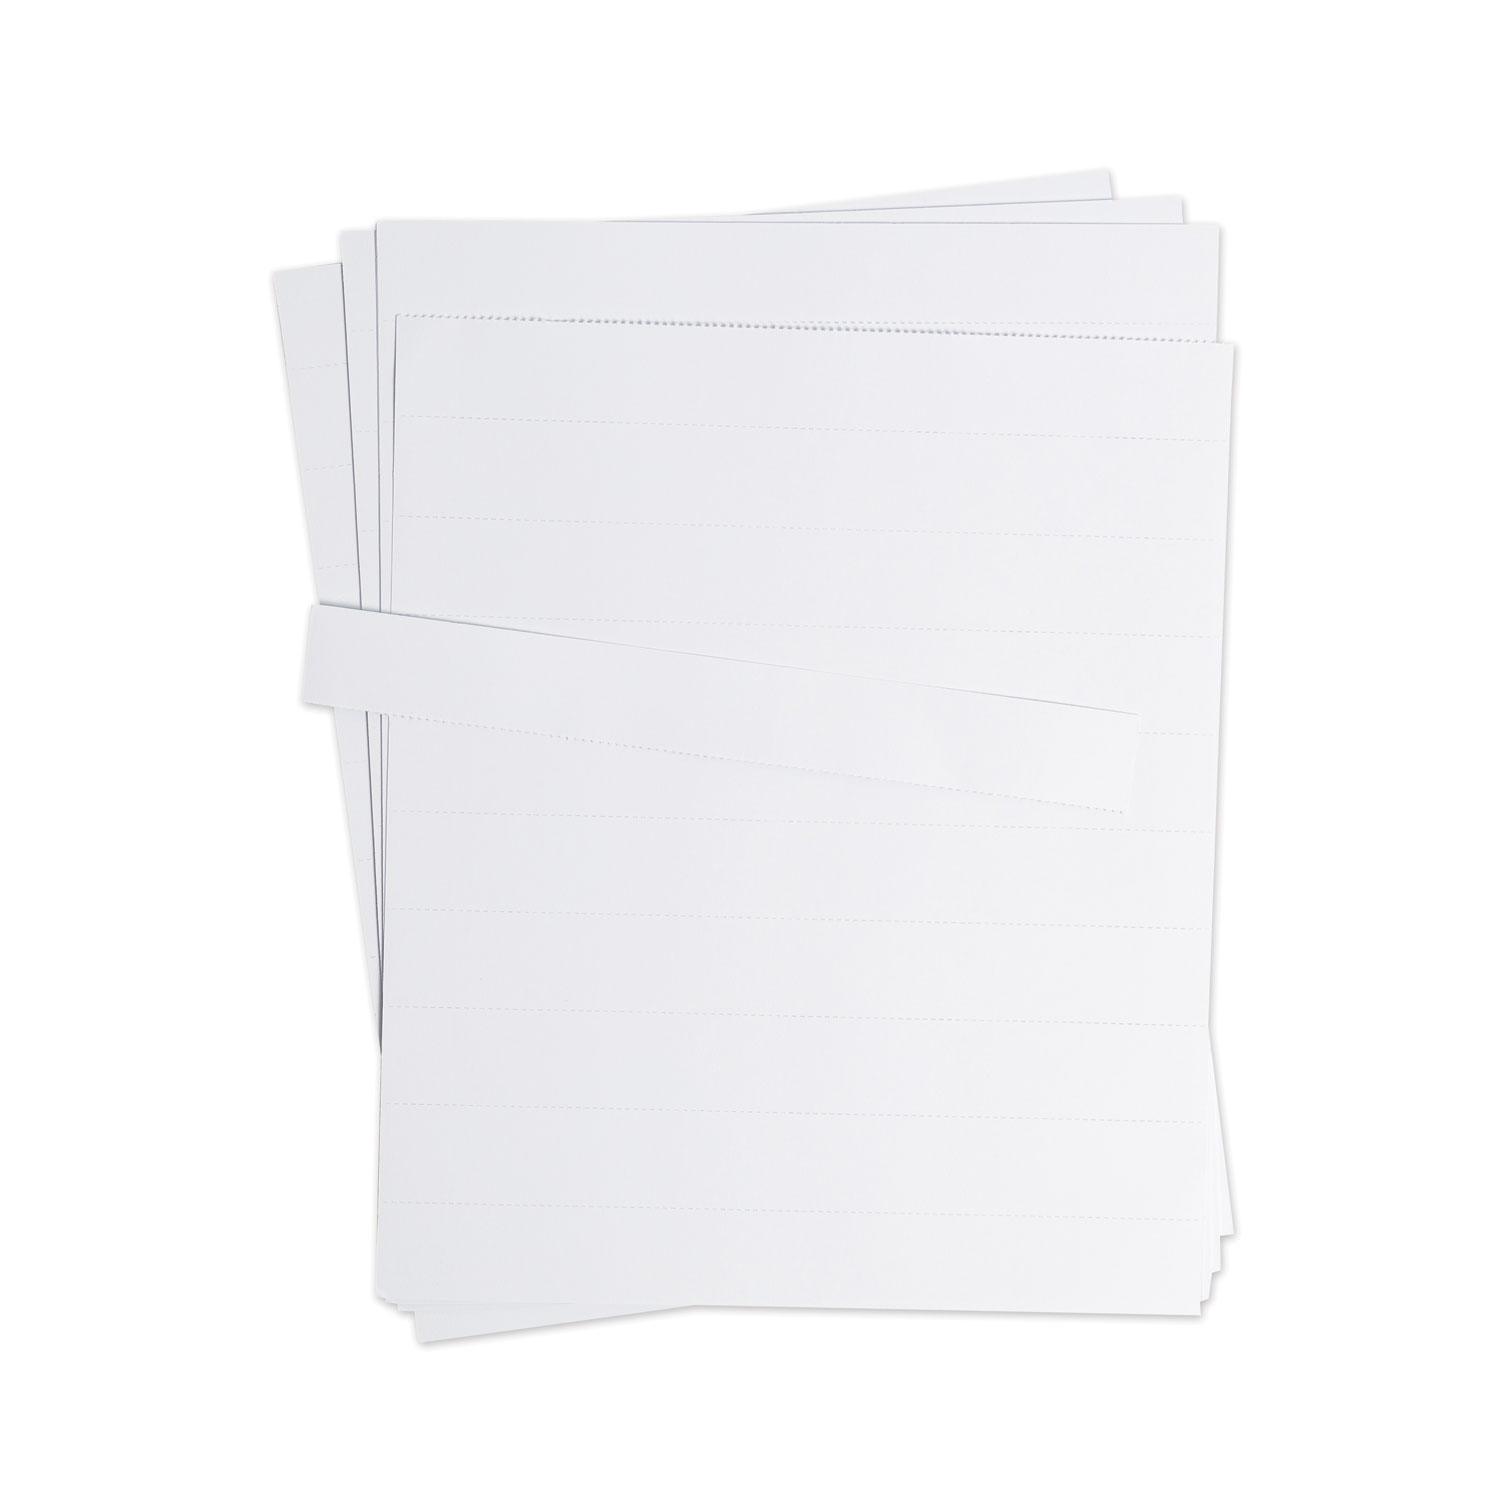  U Brands 5165U06-48 Data Card Replacement Sheet, 8.5 x 11 Sheets, White, 10/Pack (UBRFM1615) 